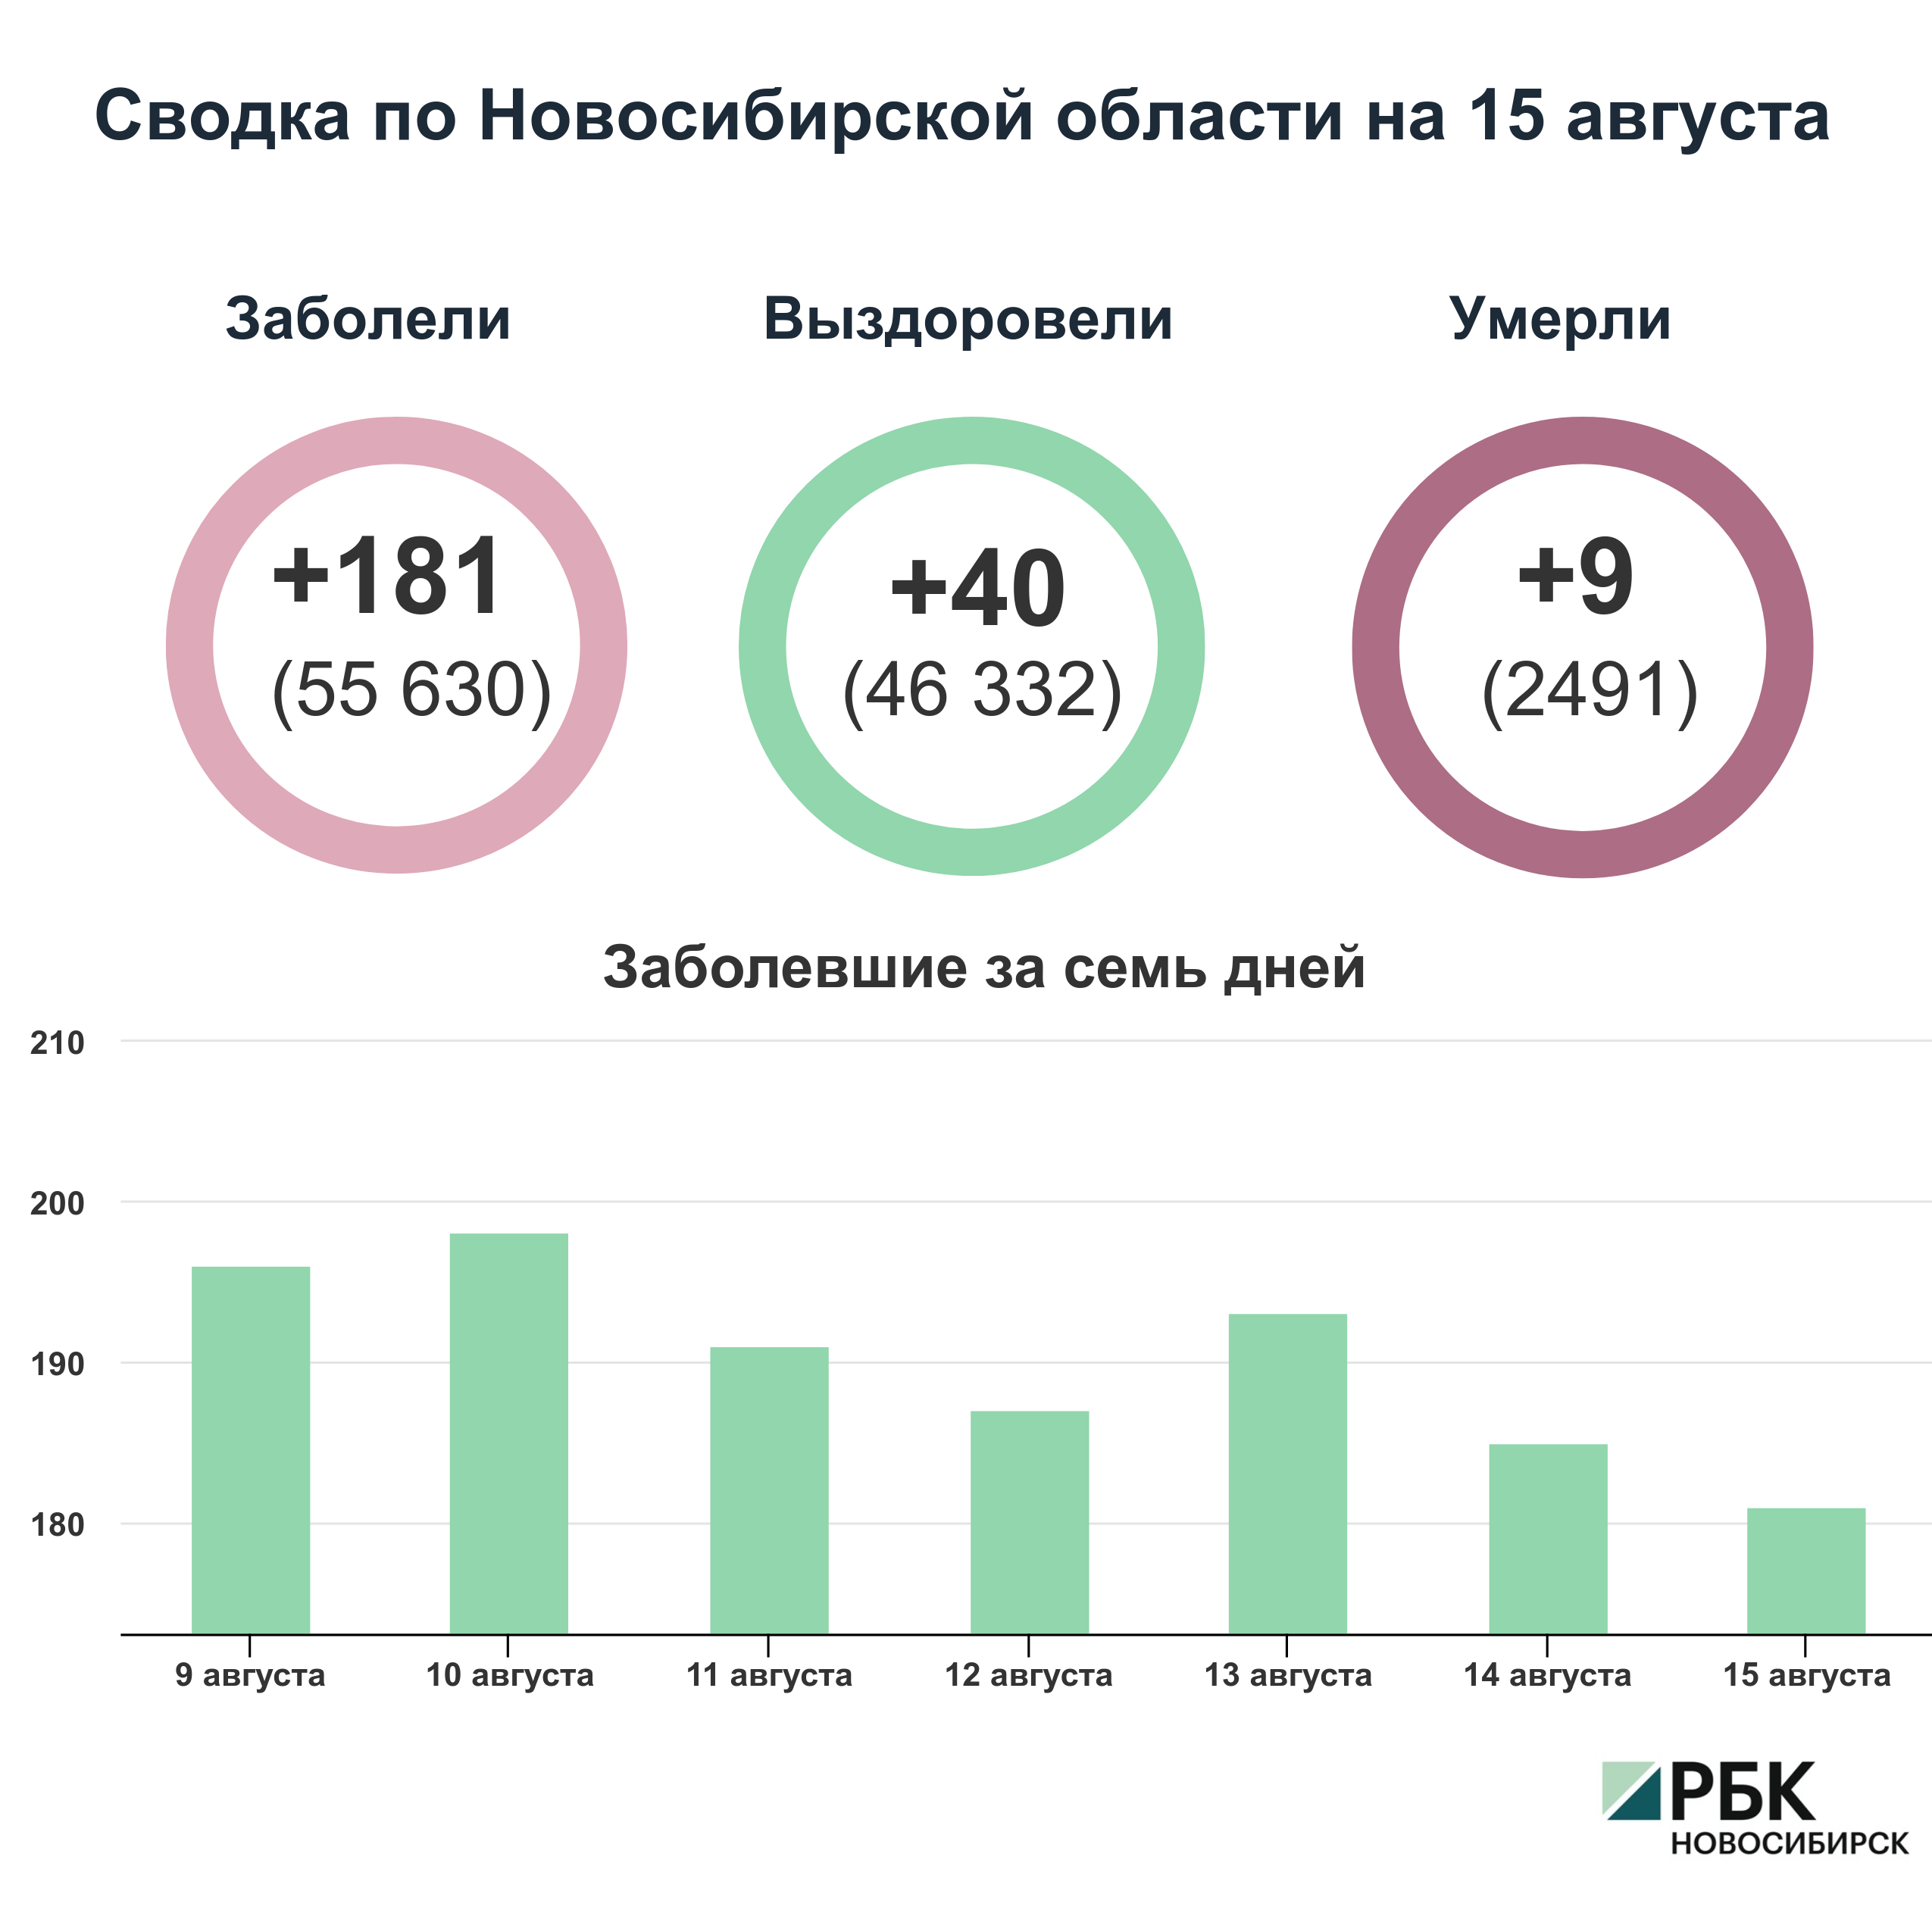 Коронавирус в Новосибирске: сводка на 15 августа